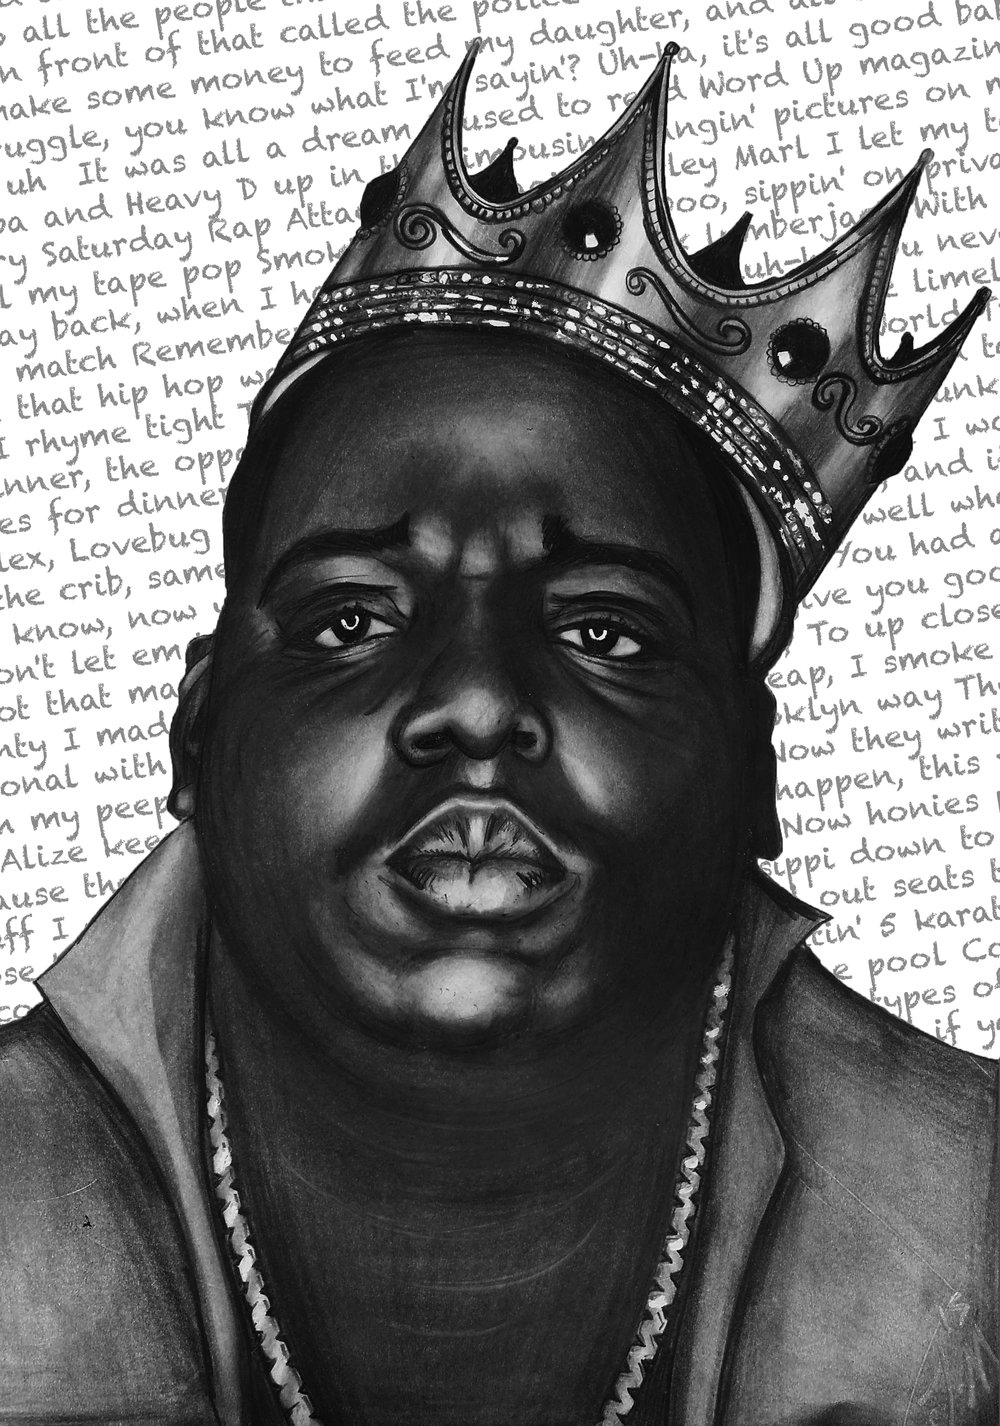 The Notorious B.I.G. – Juicy Lyrics